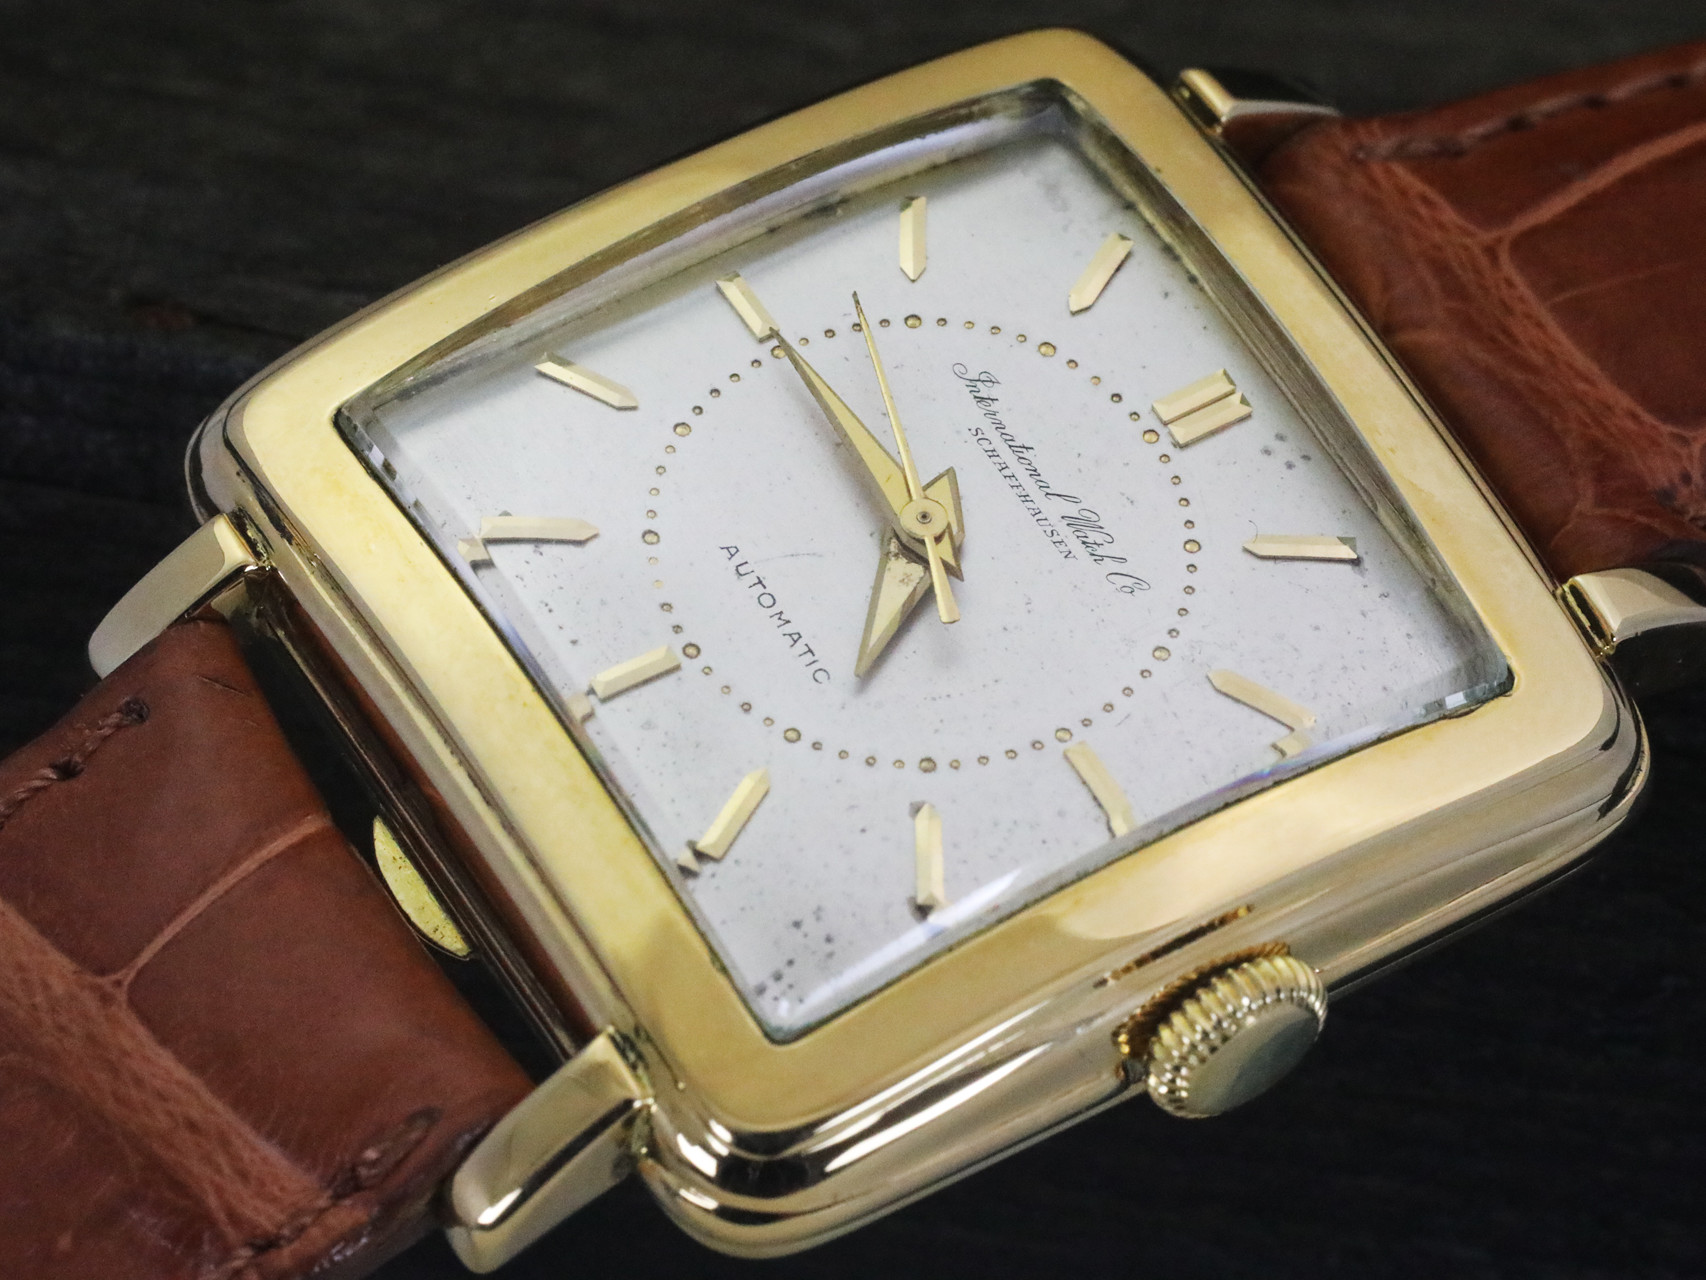 iwc cioccolatone gold vintage watches stefano mazzariol uai